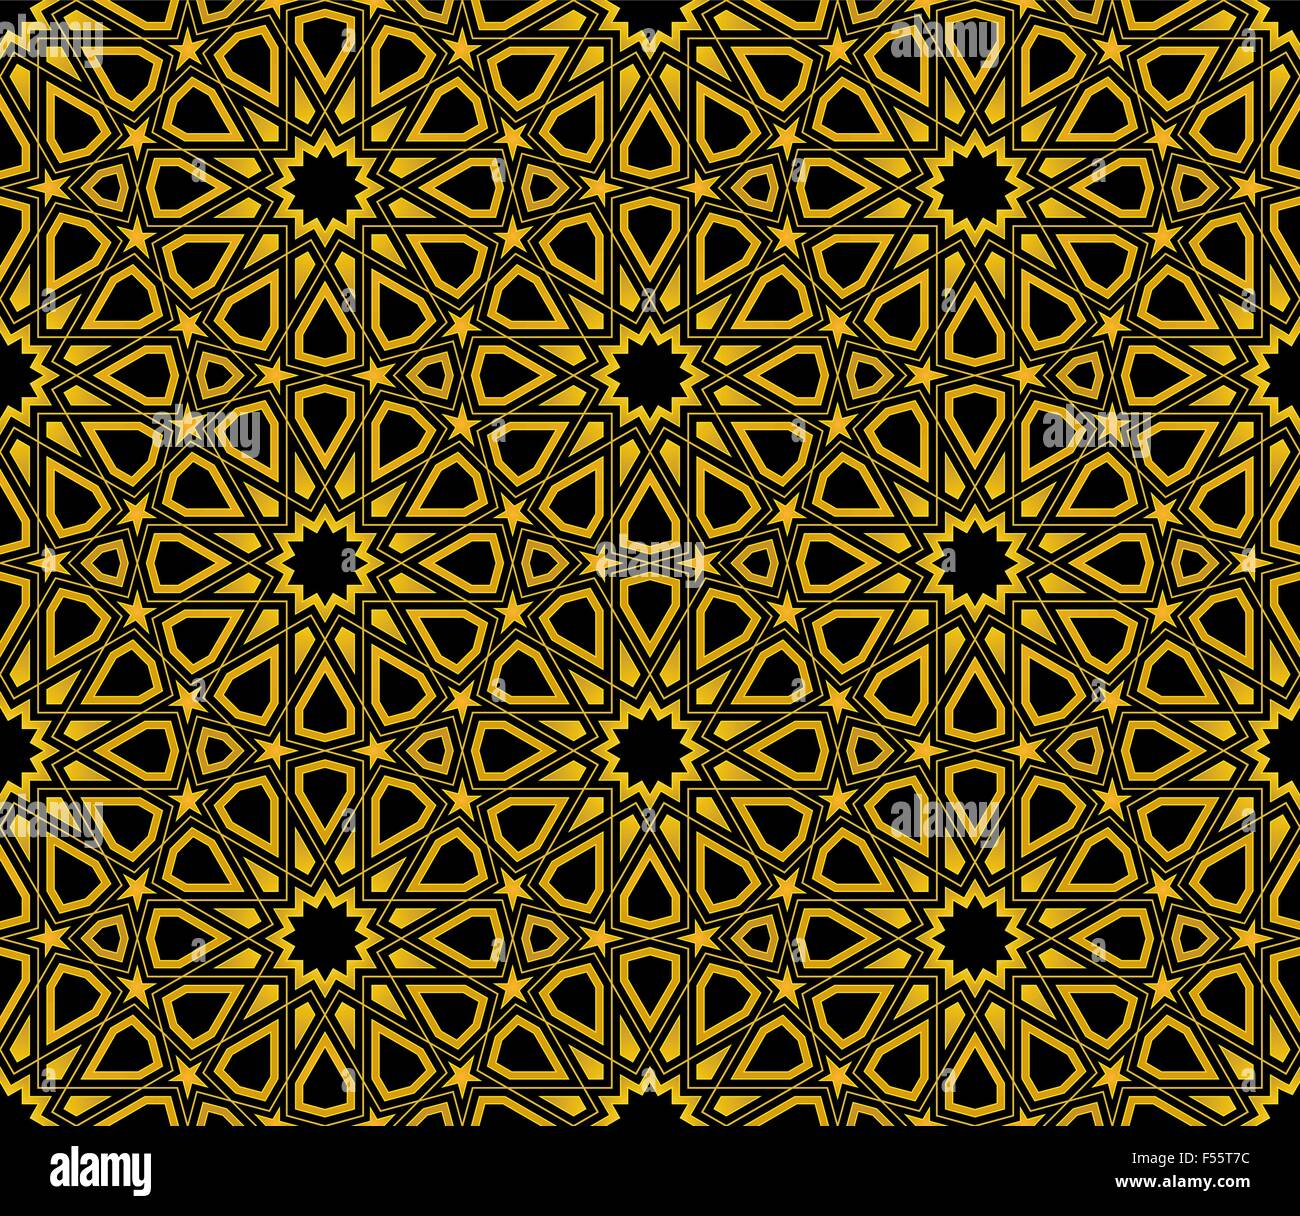 Islamic Star Pattern Seamless Background Wallpaper Design Stock